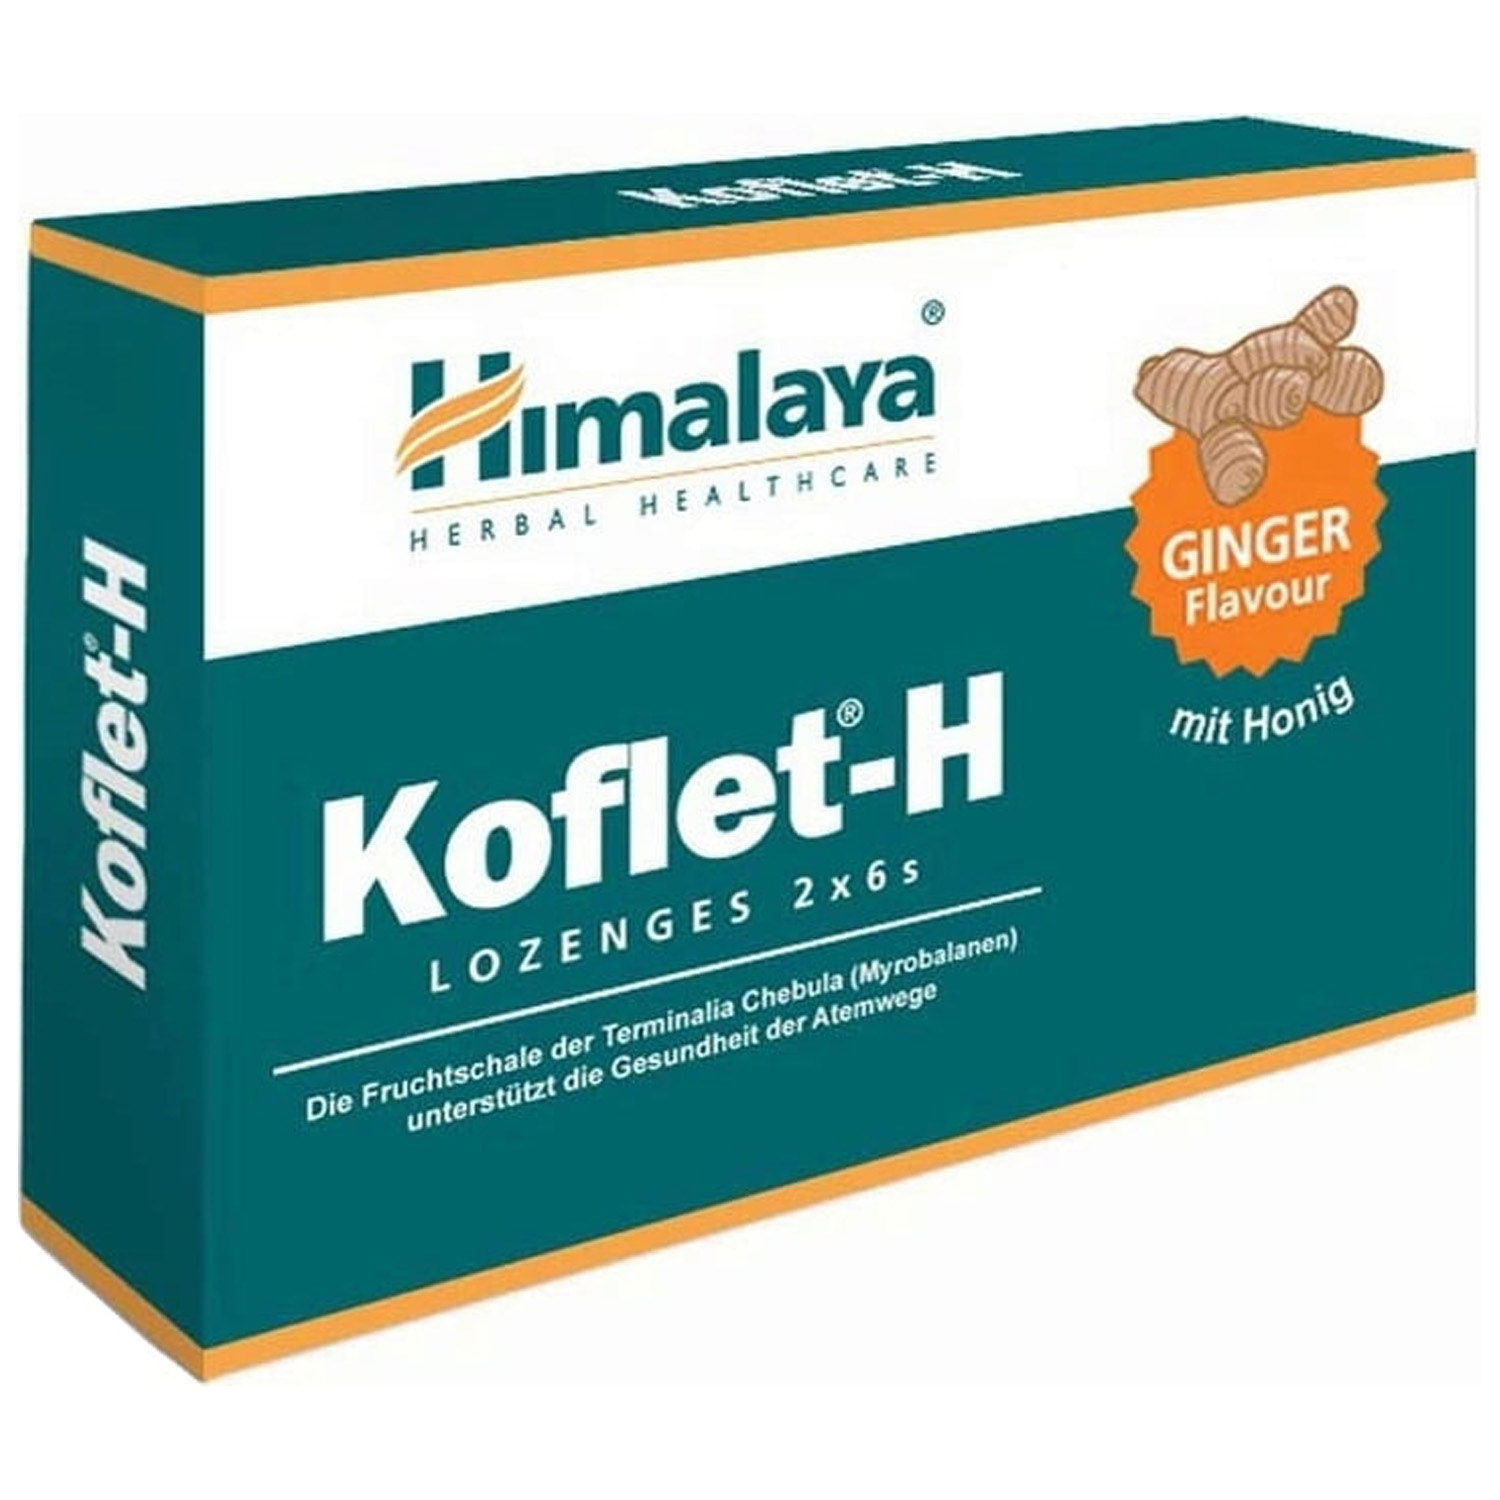 Buy Himalaya Koflet-H Ginger, 6 Lozenges Online